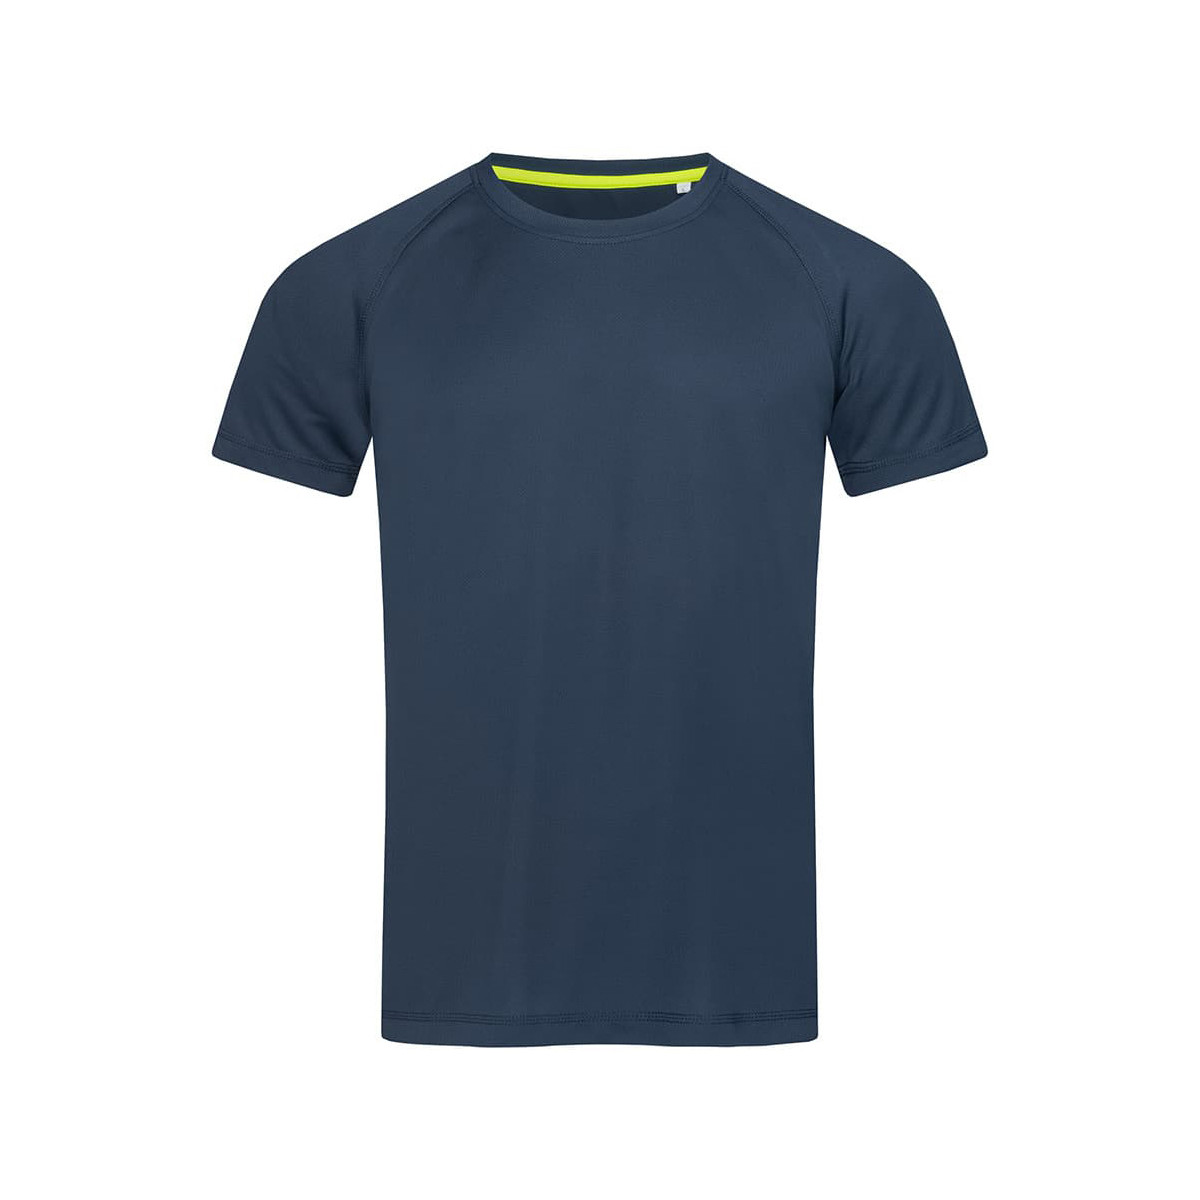 Abbigliamento Uomo T-shirt maniche corte Stedman AB343 Blu